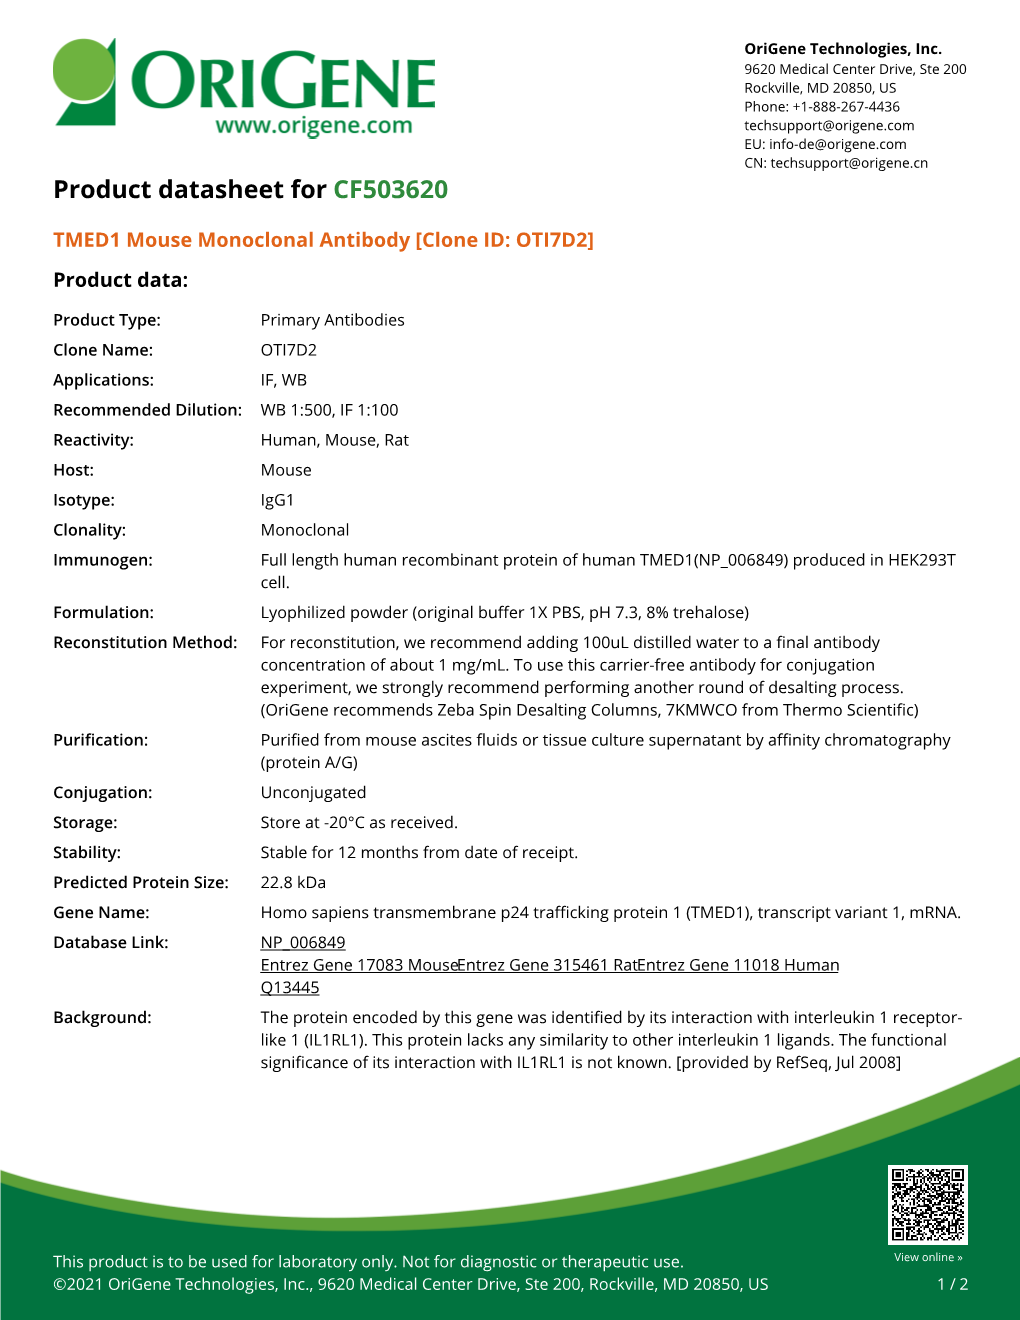 TMED1 Mouse Monoclonal Antibody [Clone ID: OTI7D2] Product Data